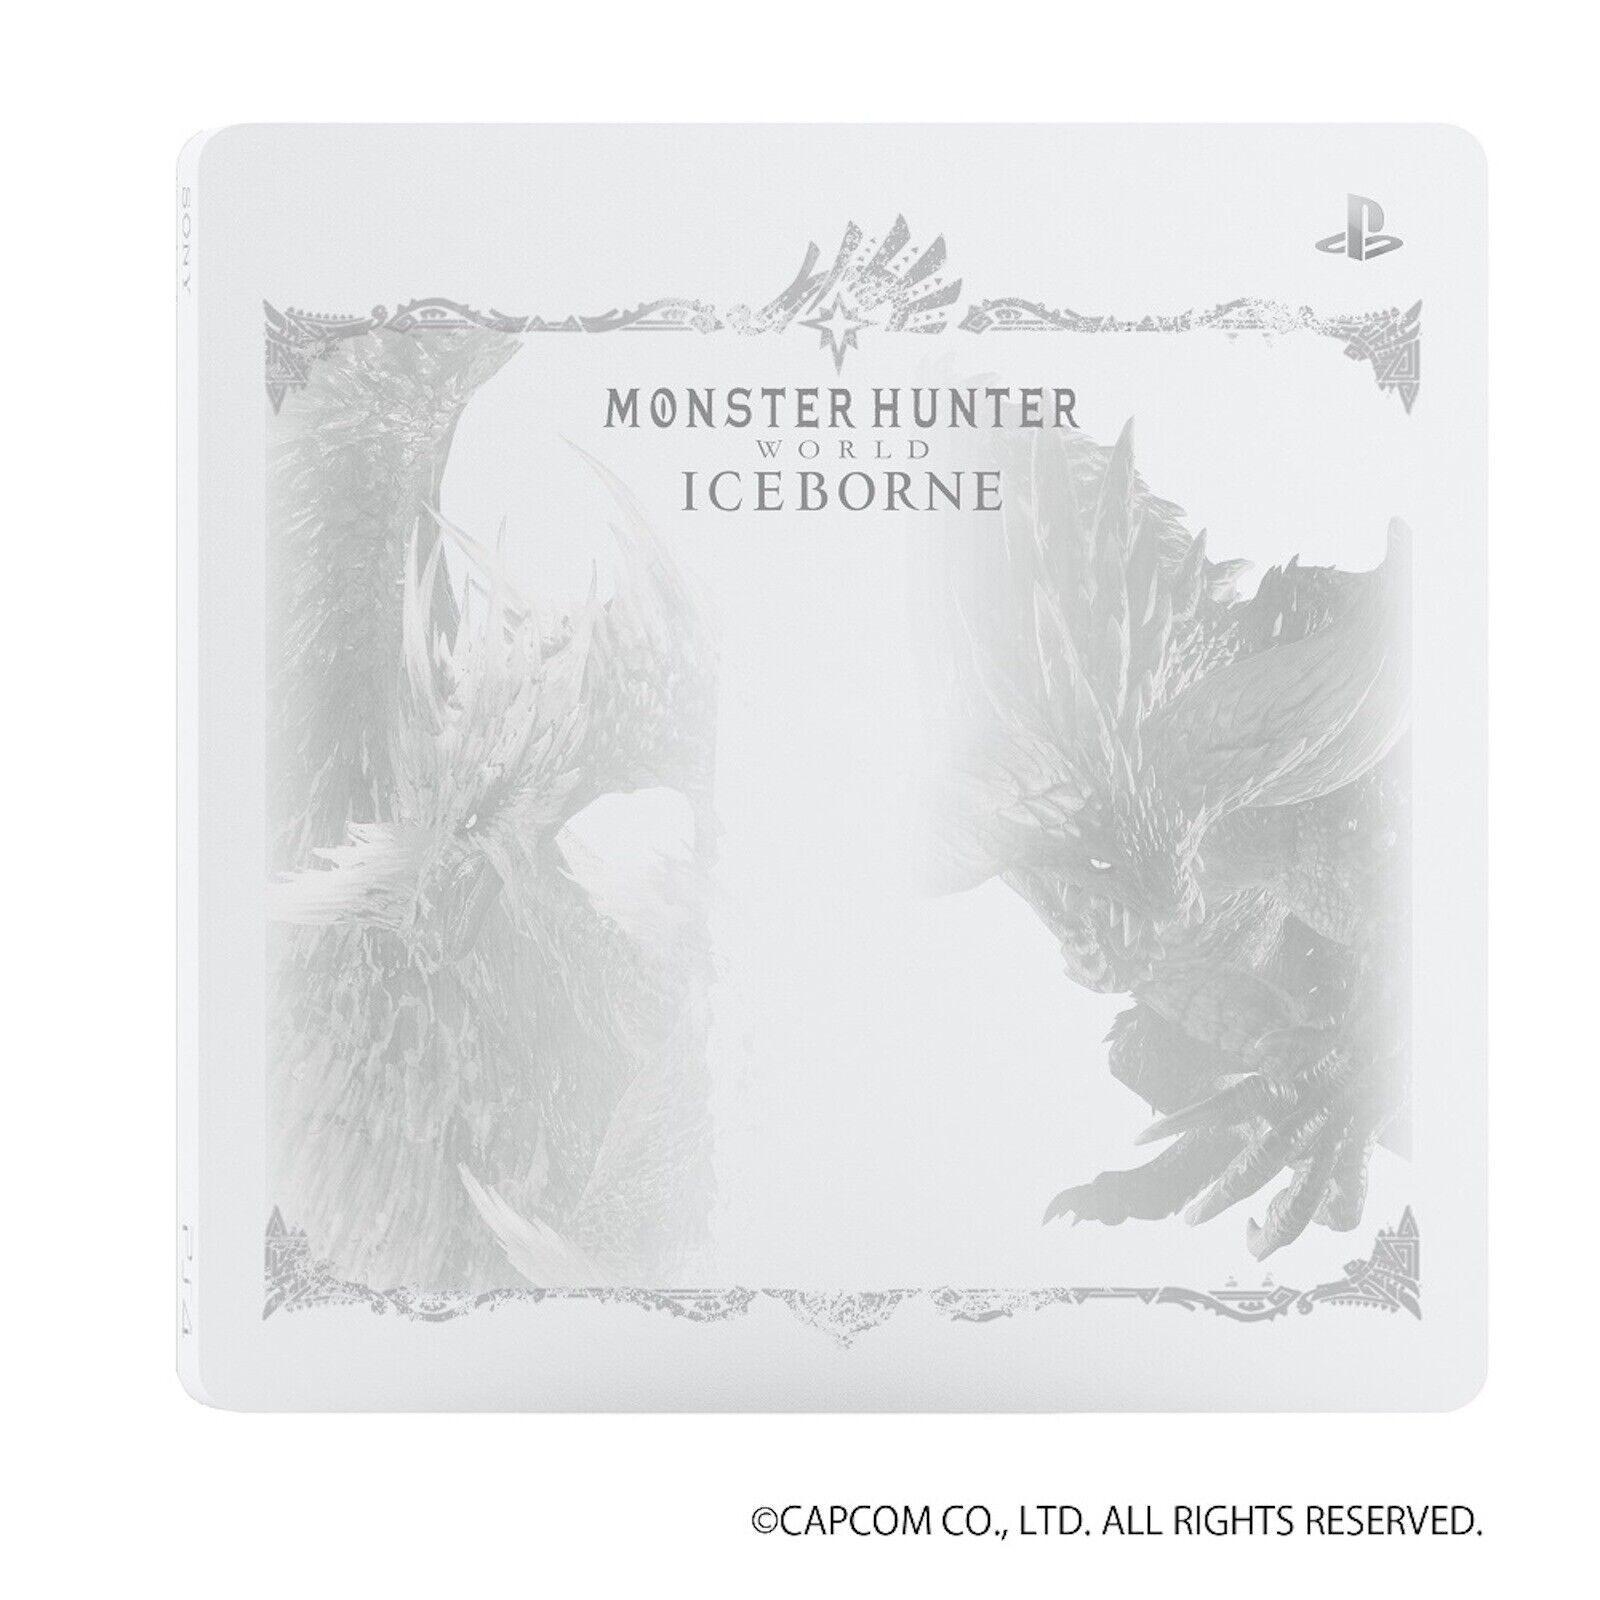 SONY PS4 MONSTER HUNTER WORLD ICEBORNE EDITION Top cover White ver. NEW Japan 